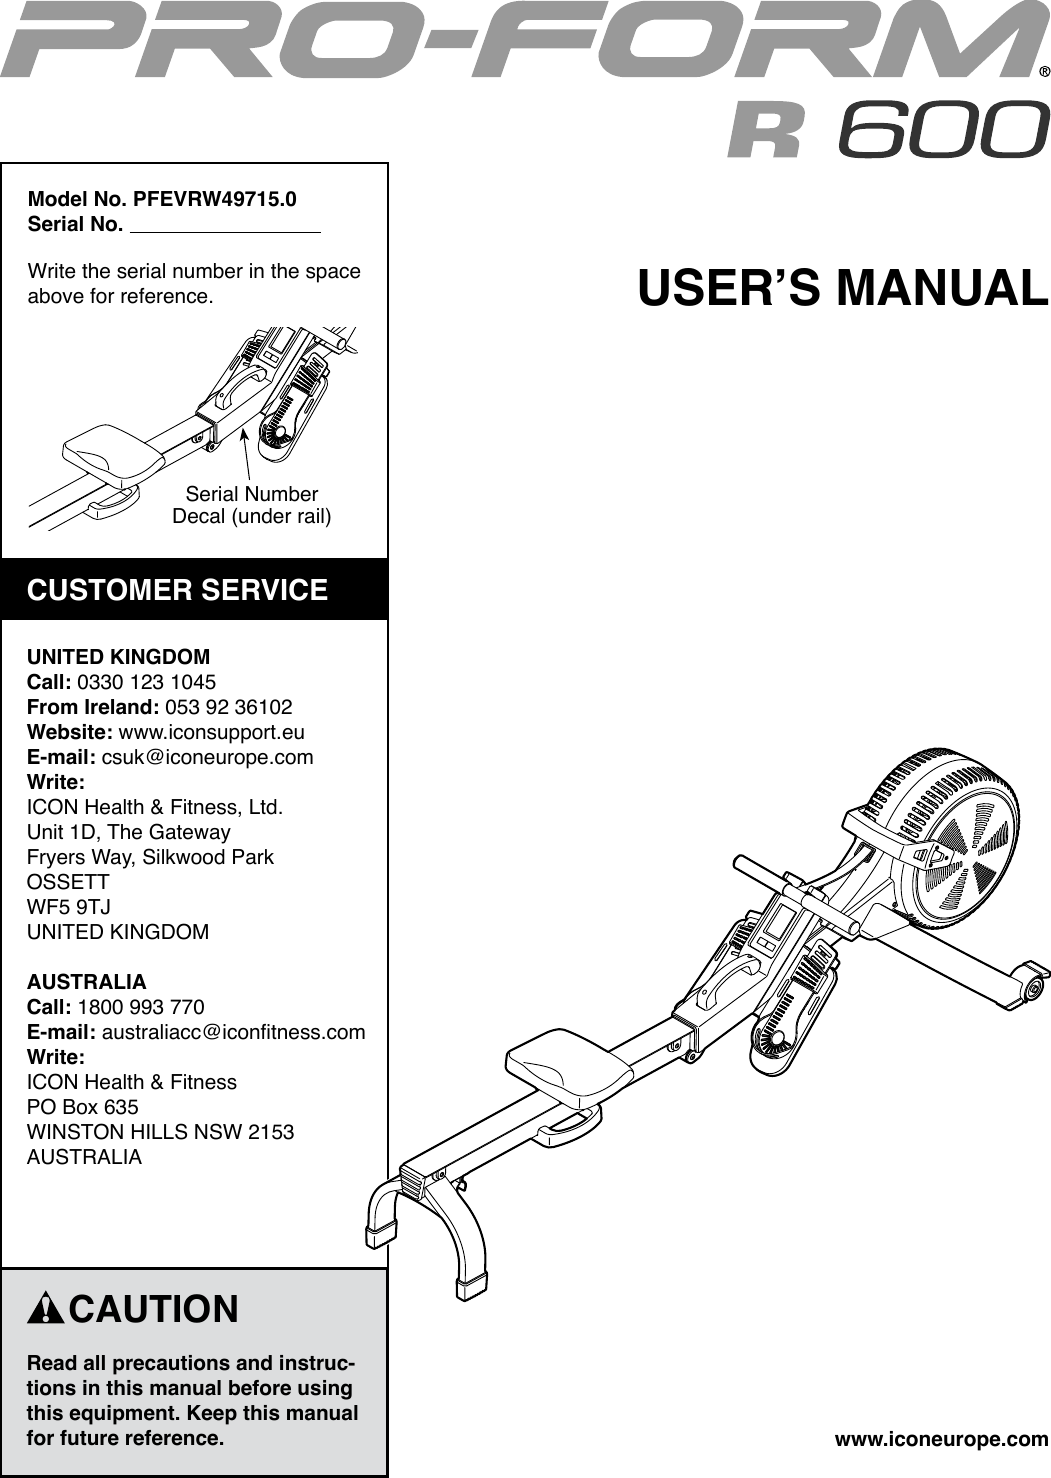 Proform Pfevrw497150 R 600 Rower Users Manual